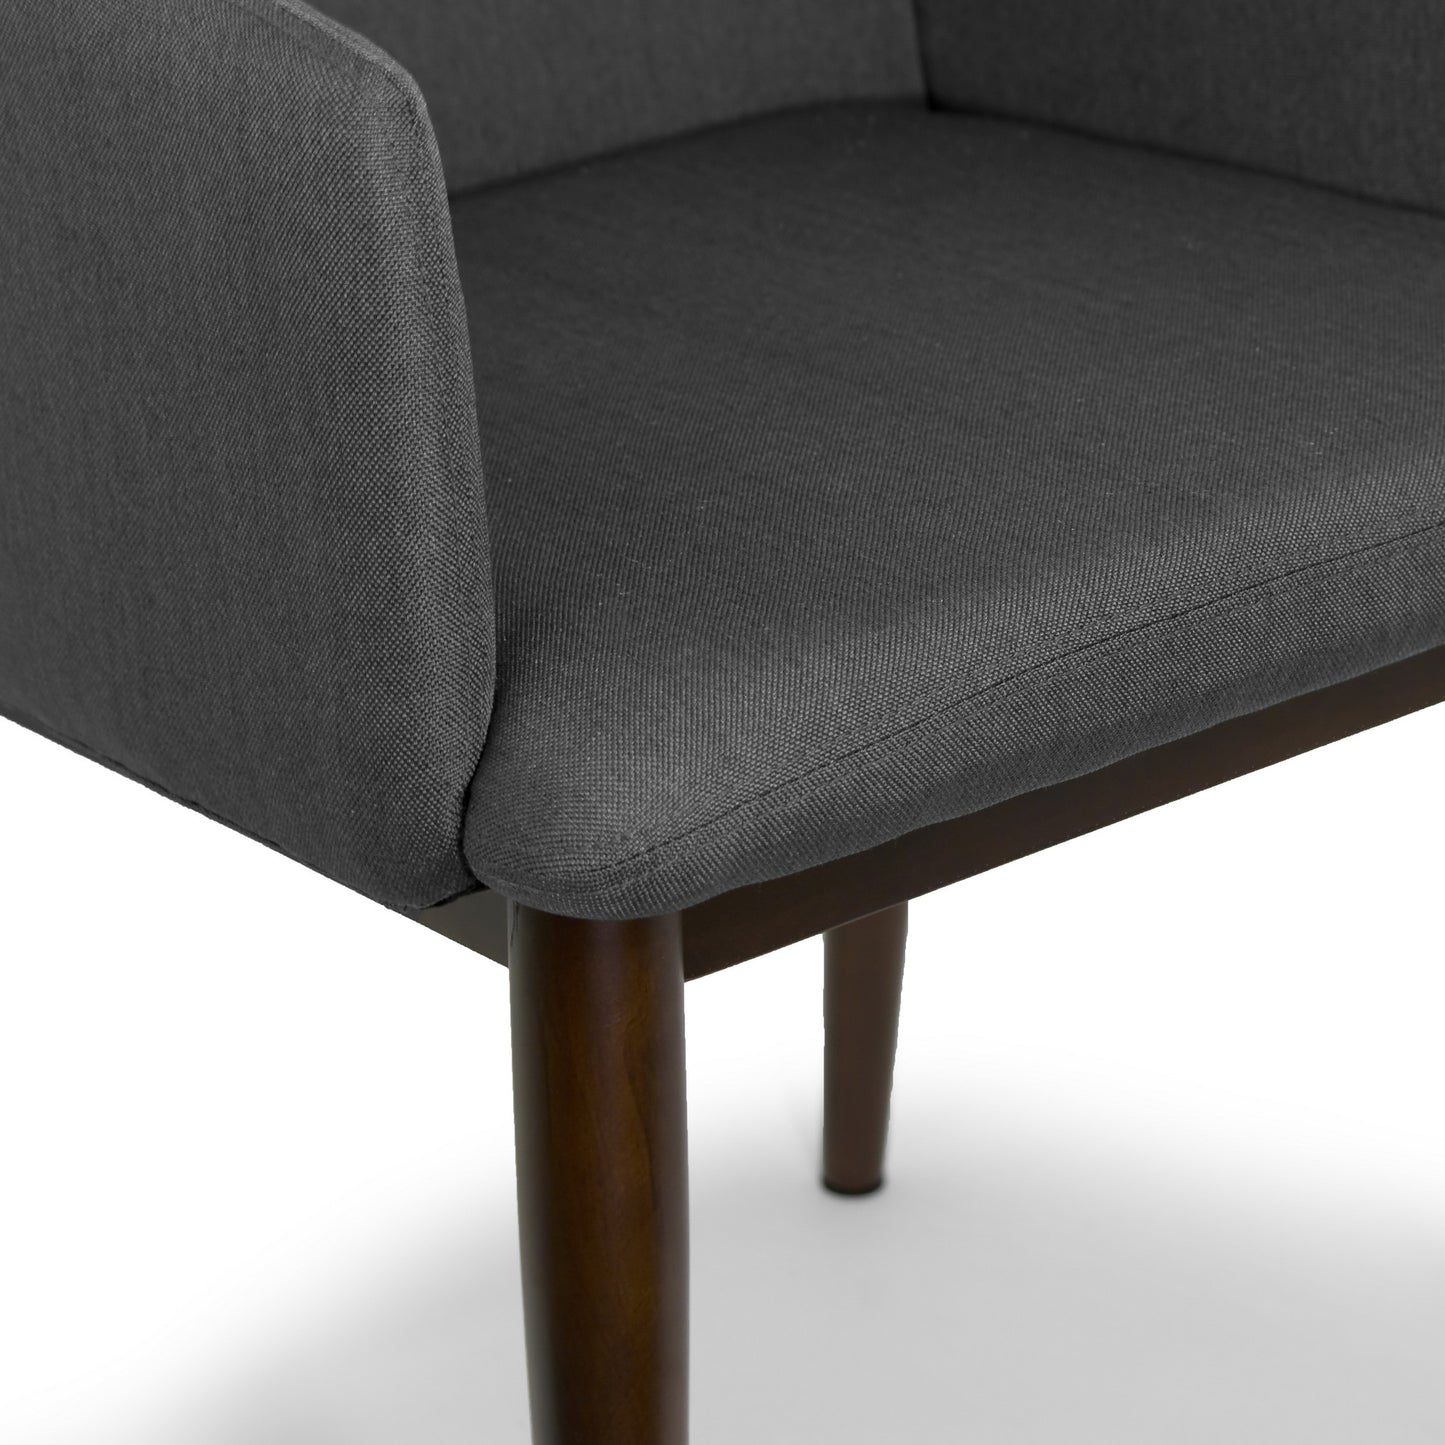 Set of 2 Aila Dark Grey Fabric Accent Chair Arm Chair with Dark Brown Beech Legs